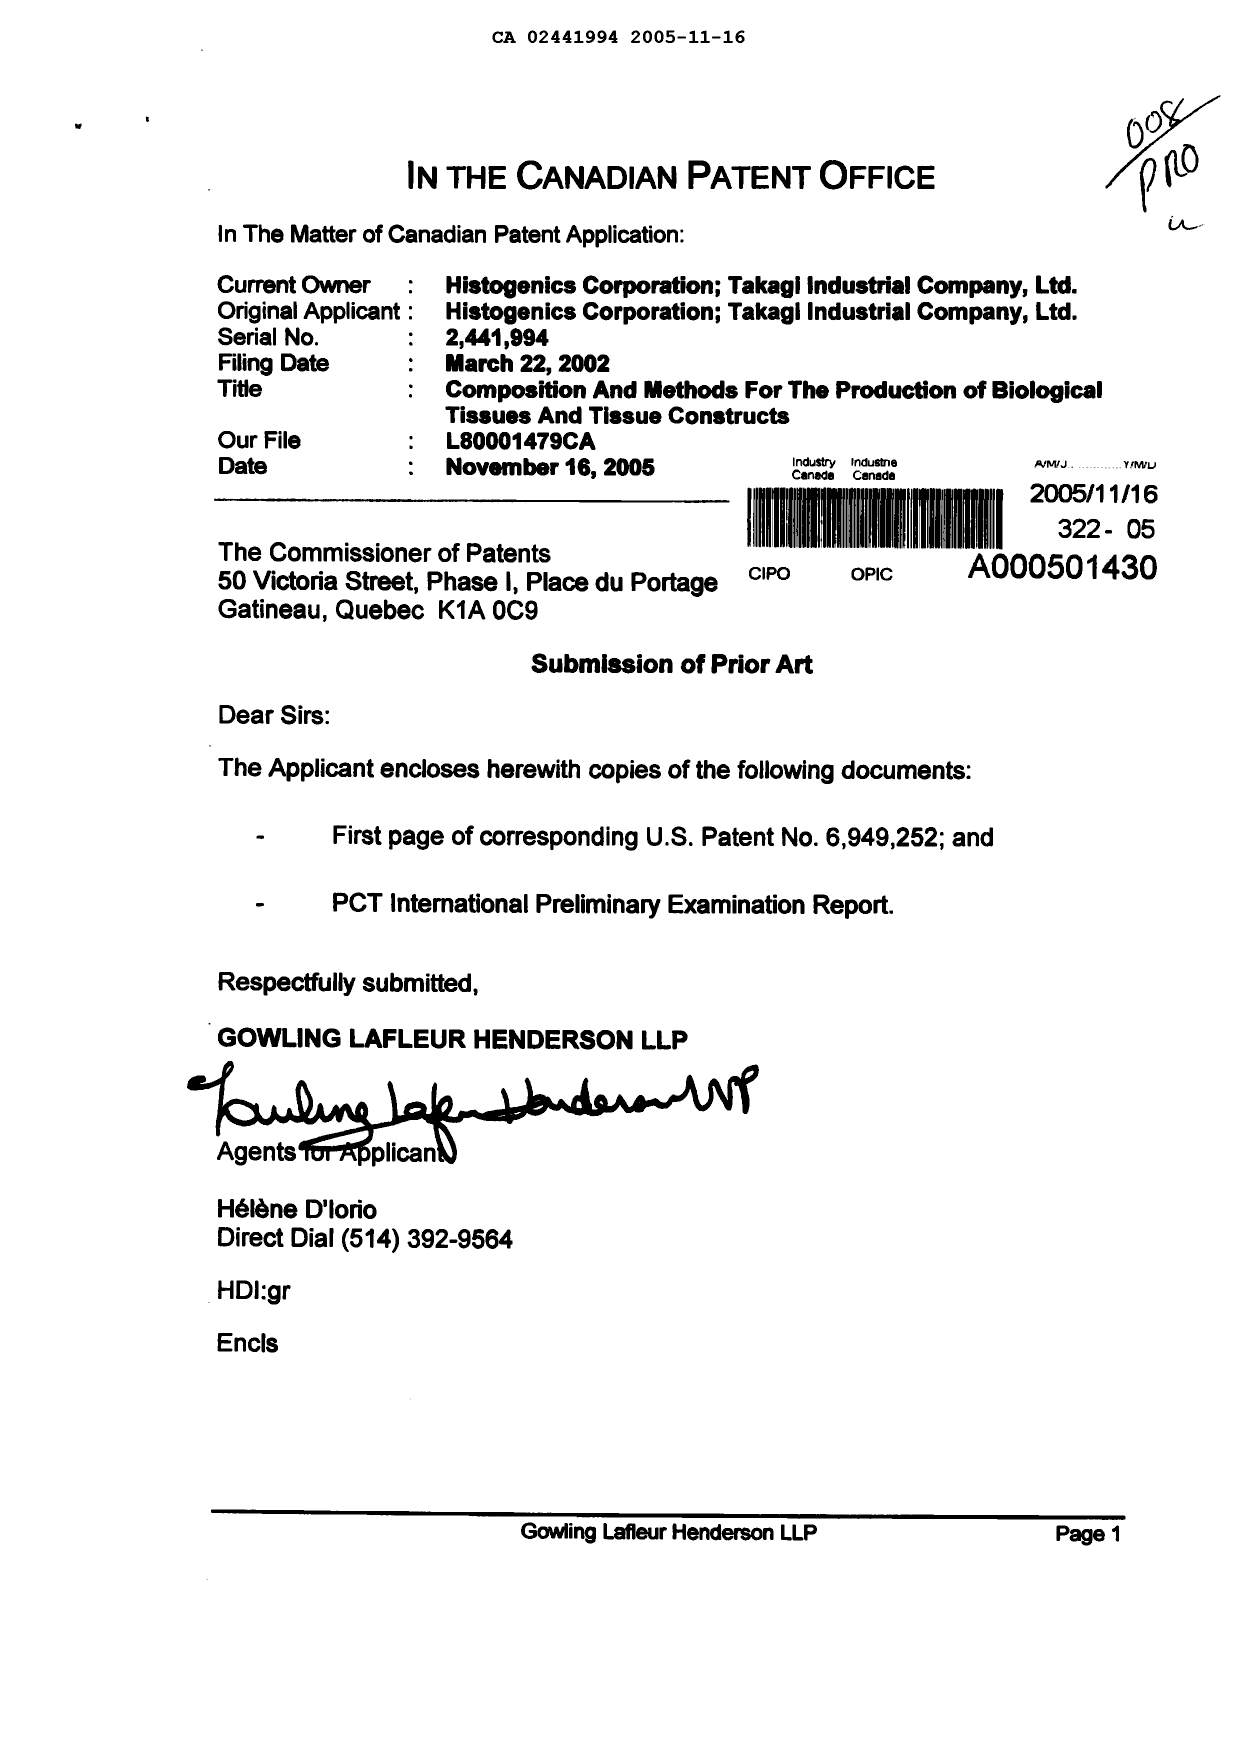 Canadian Patent Document 2441994. Prosecution-Amendment 20051116. Image 1 of 1